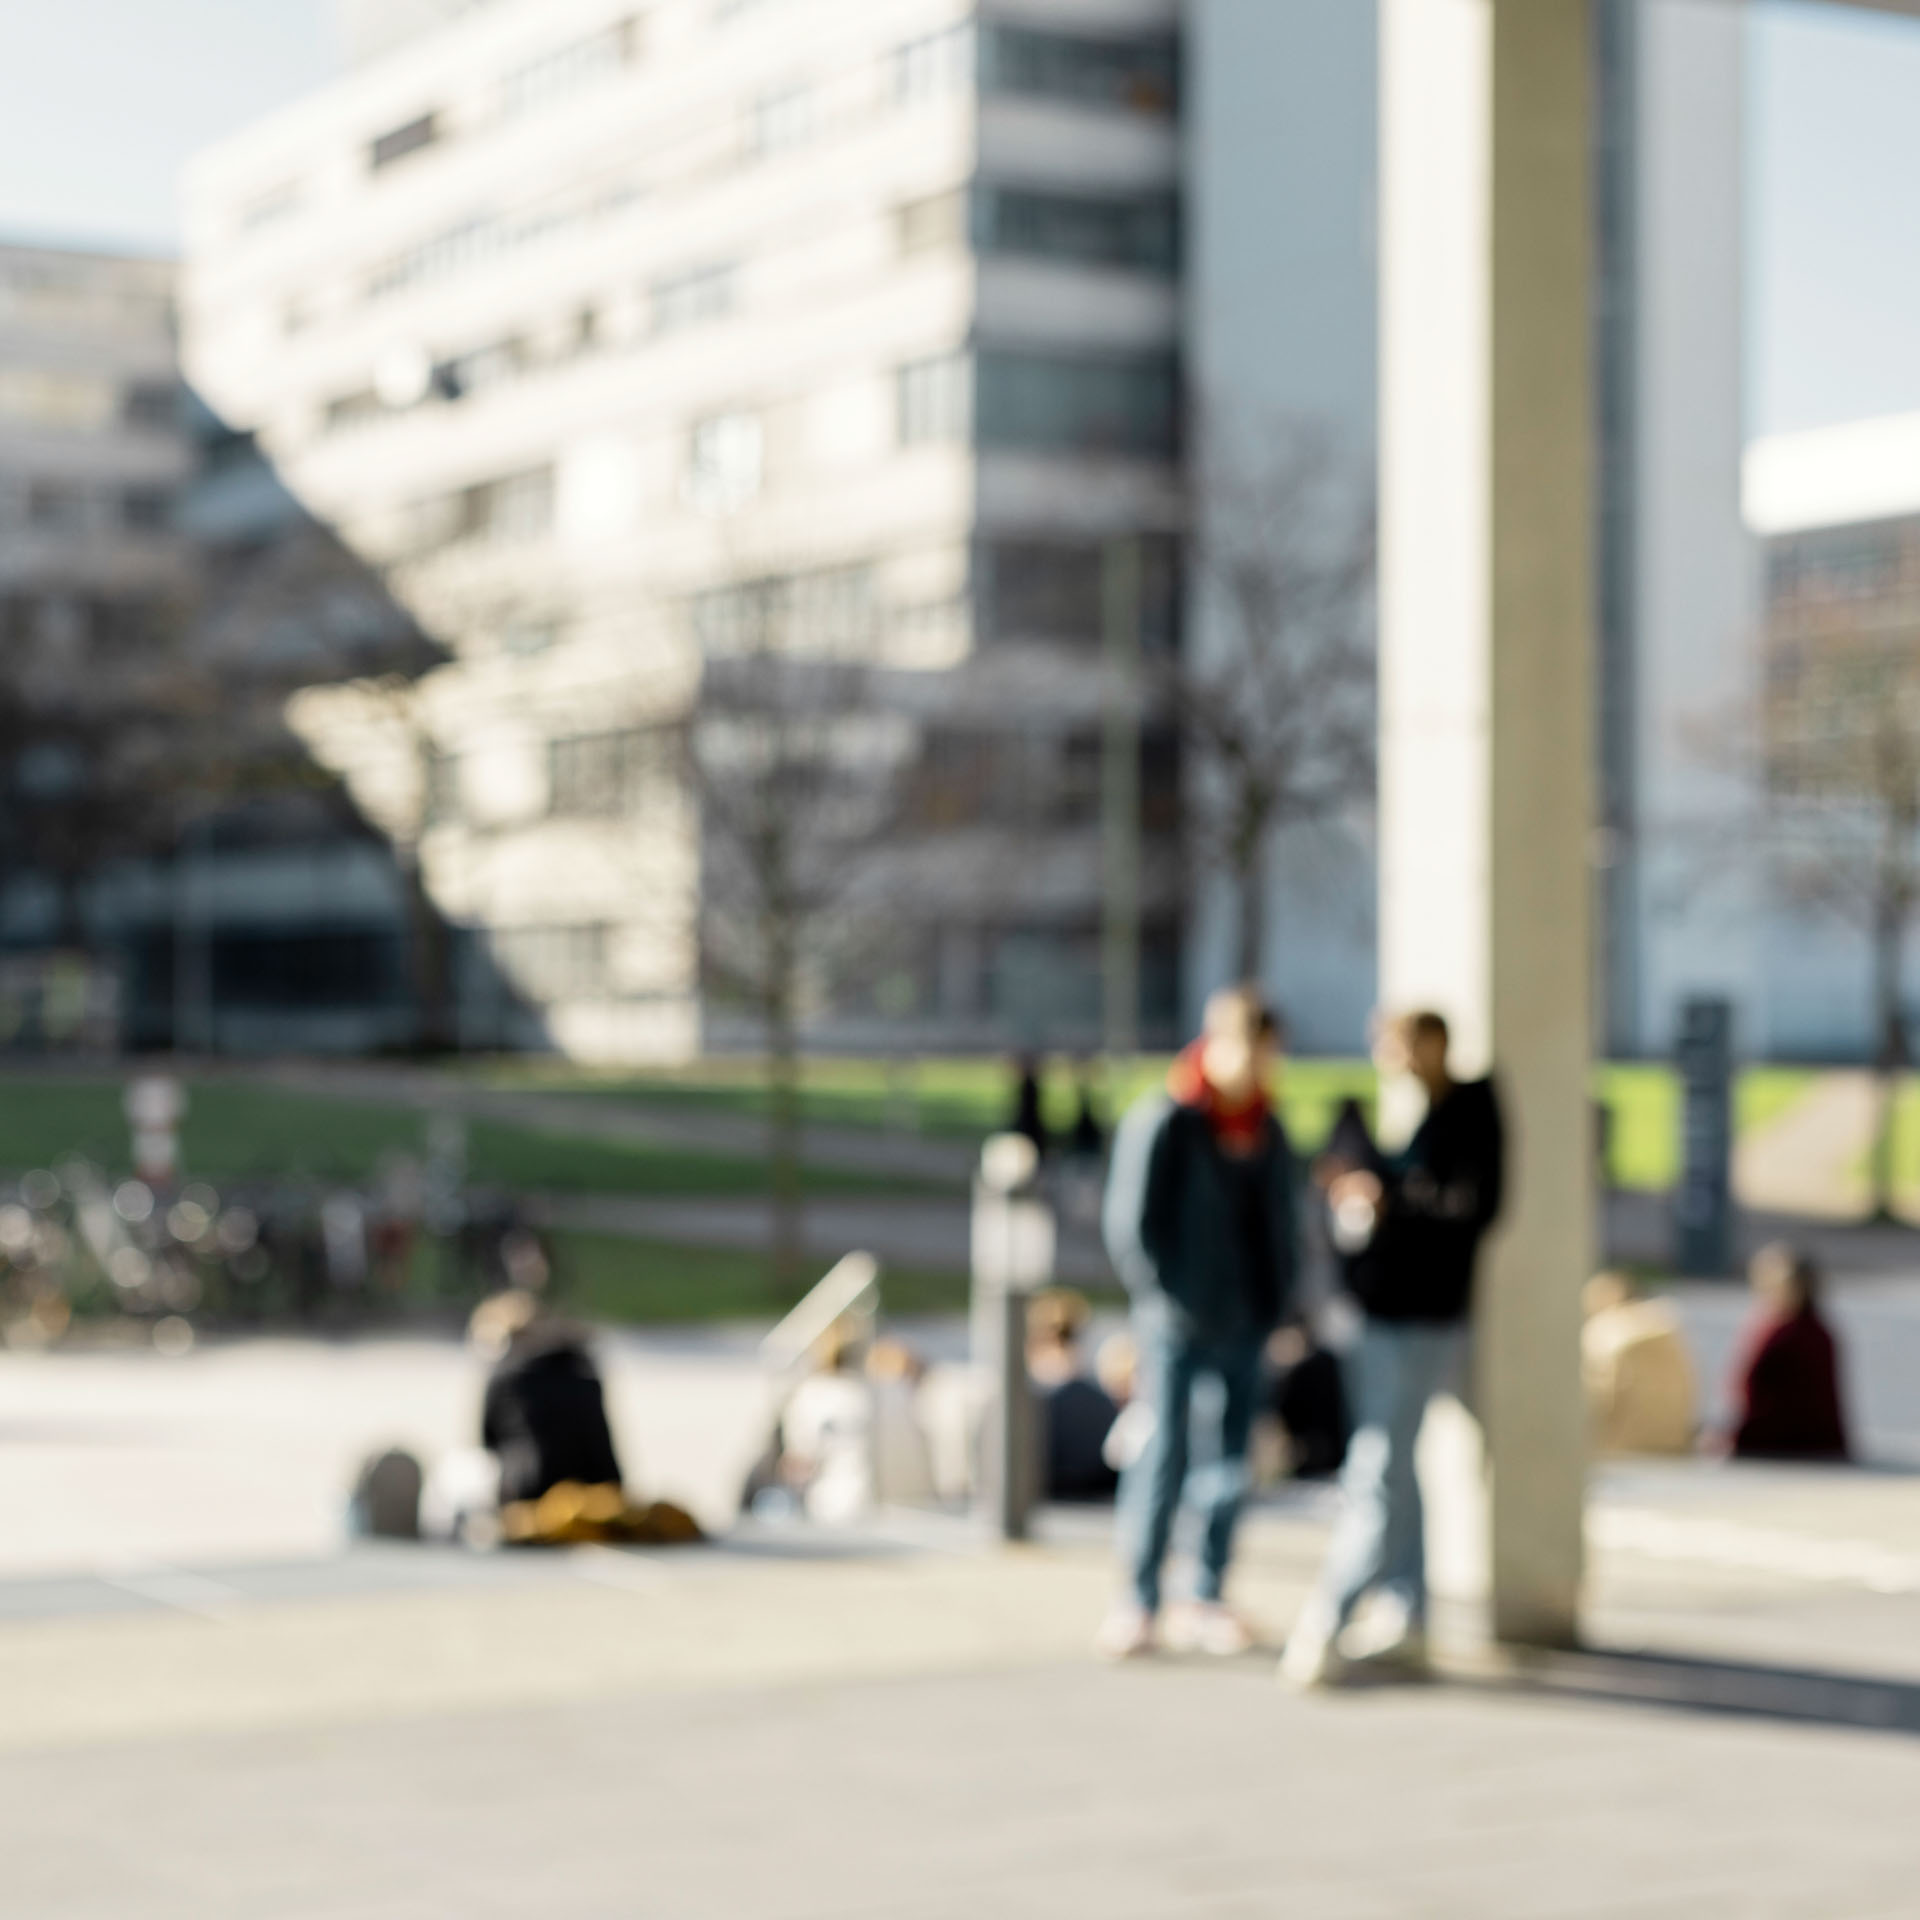 People lingering on Bielefeld University campus